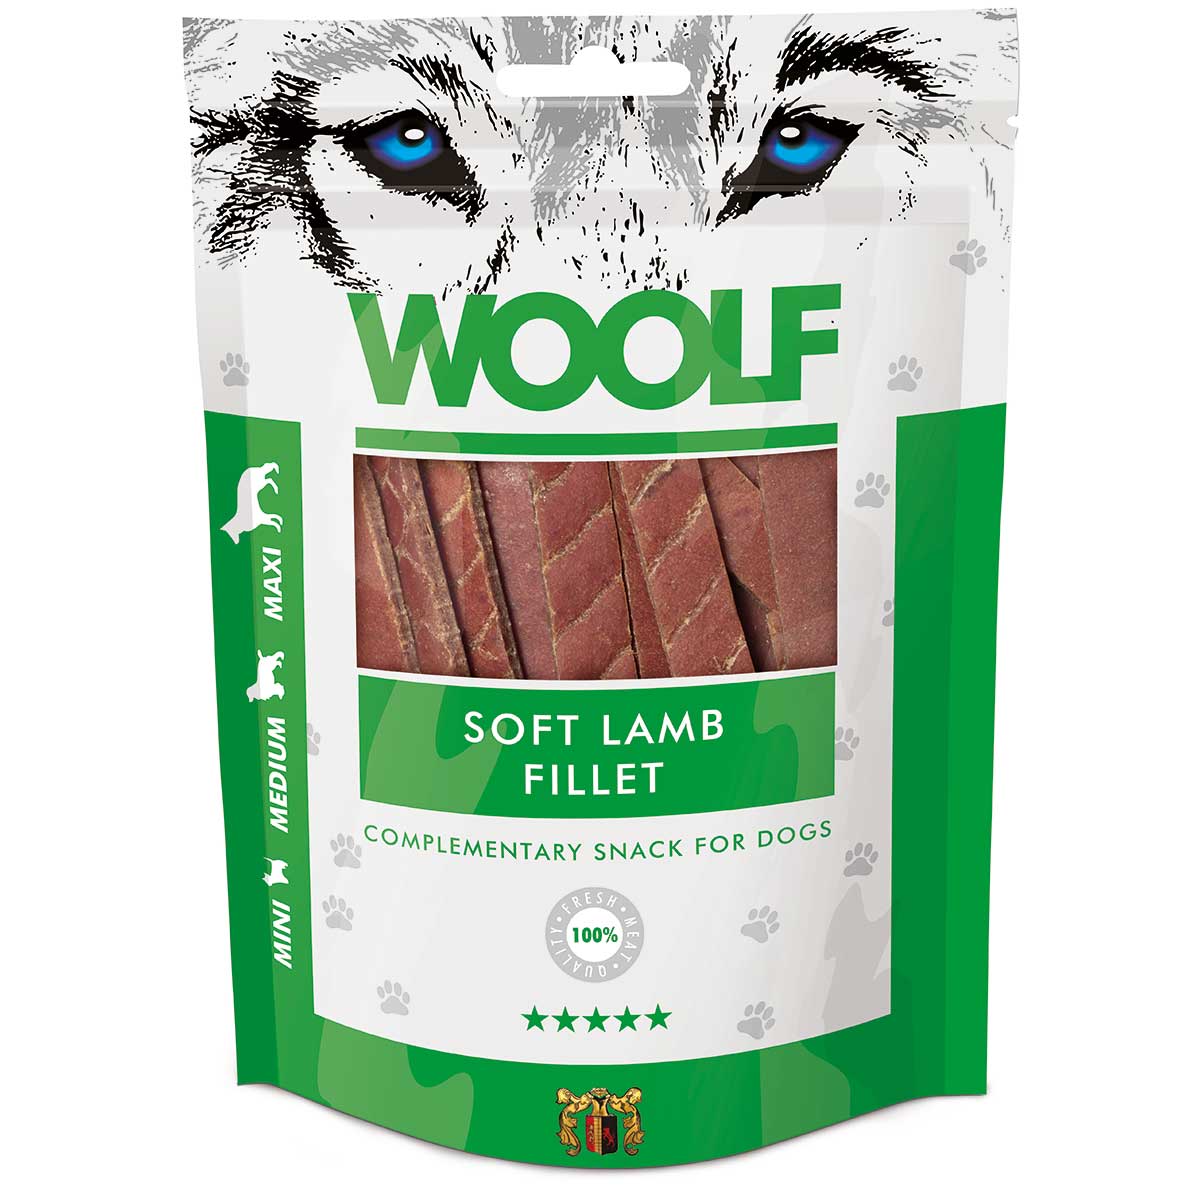 Woolf Dog treat soft lamb fillet